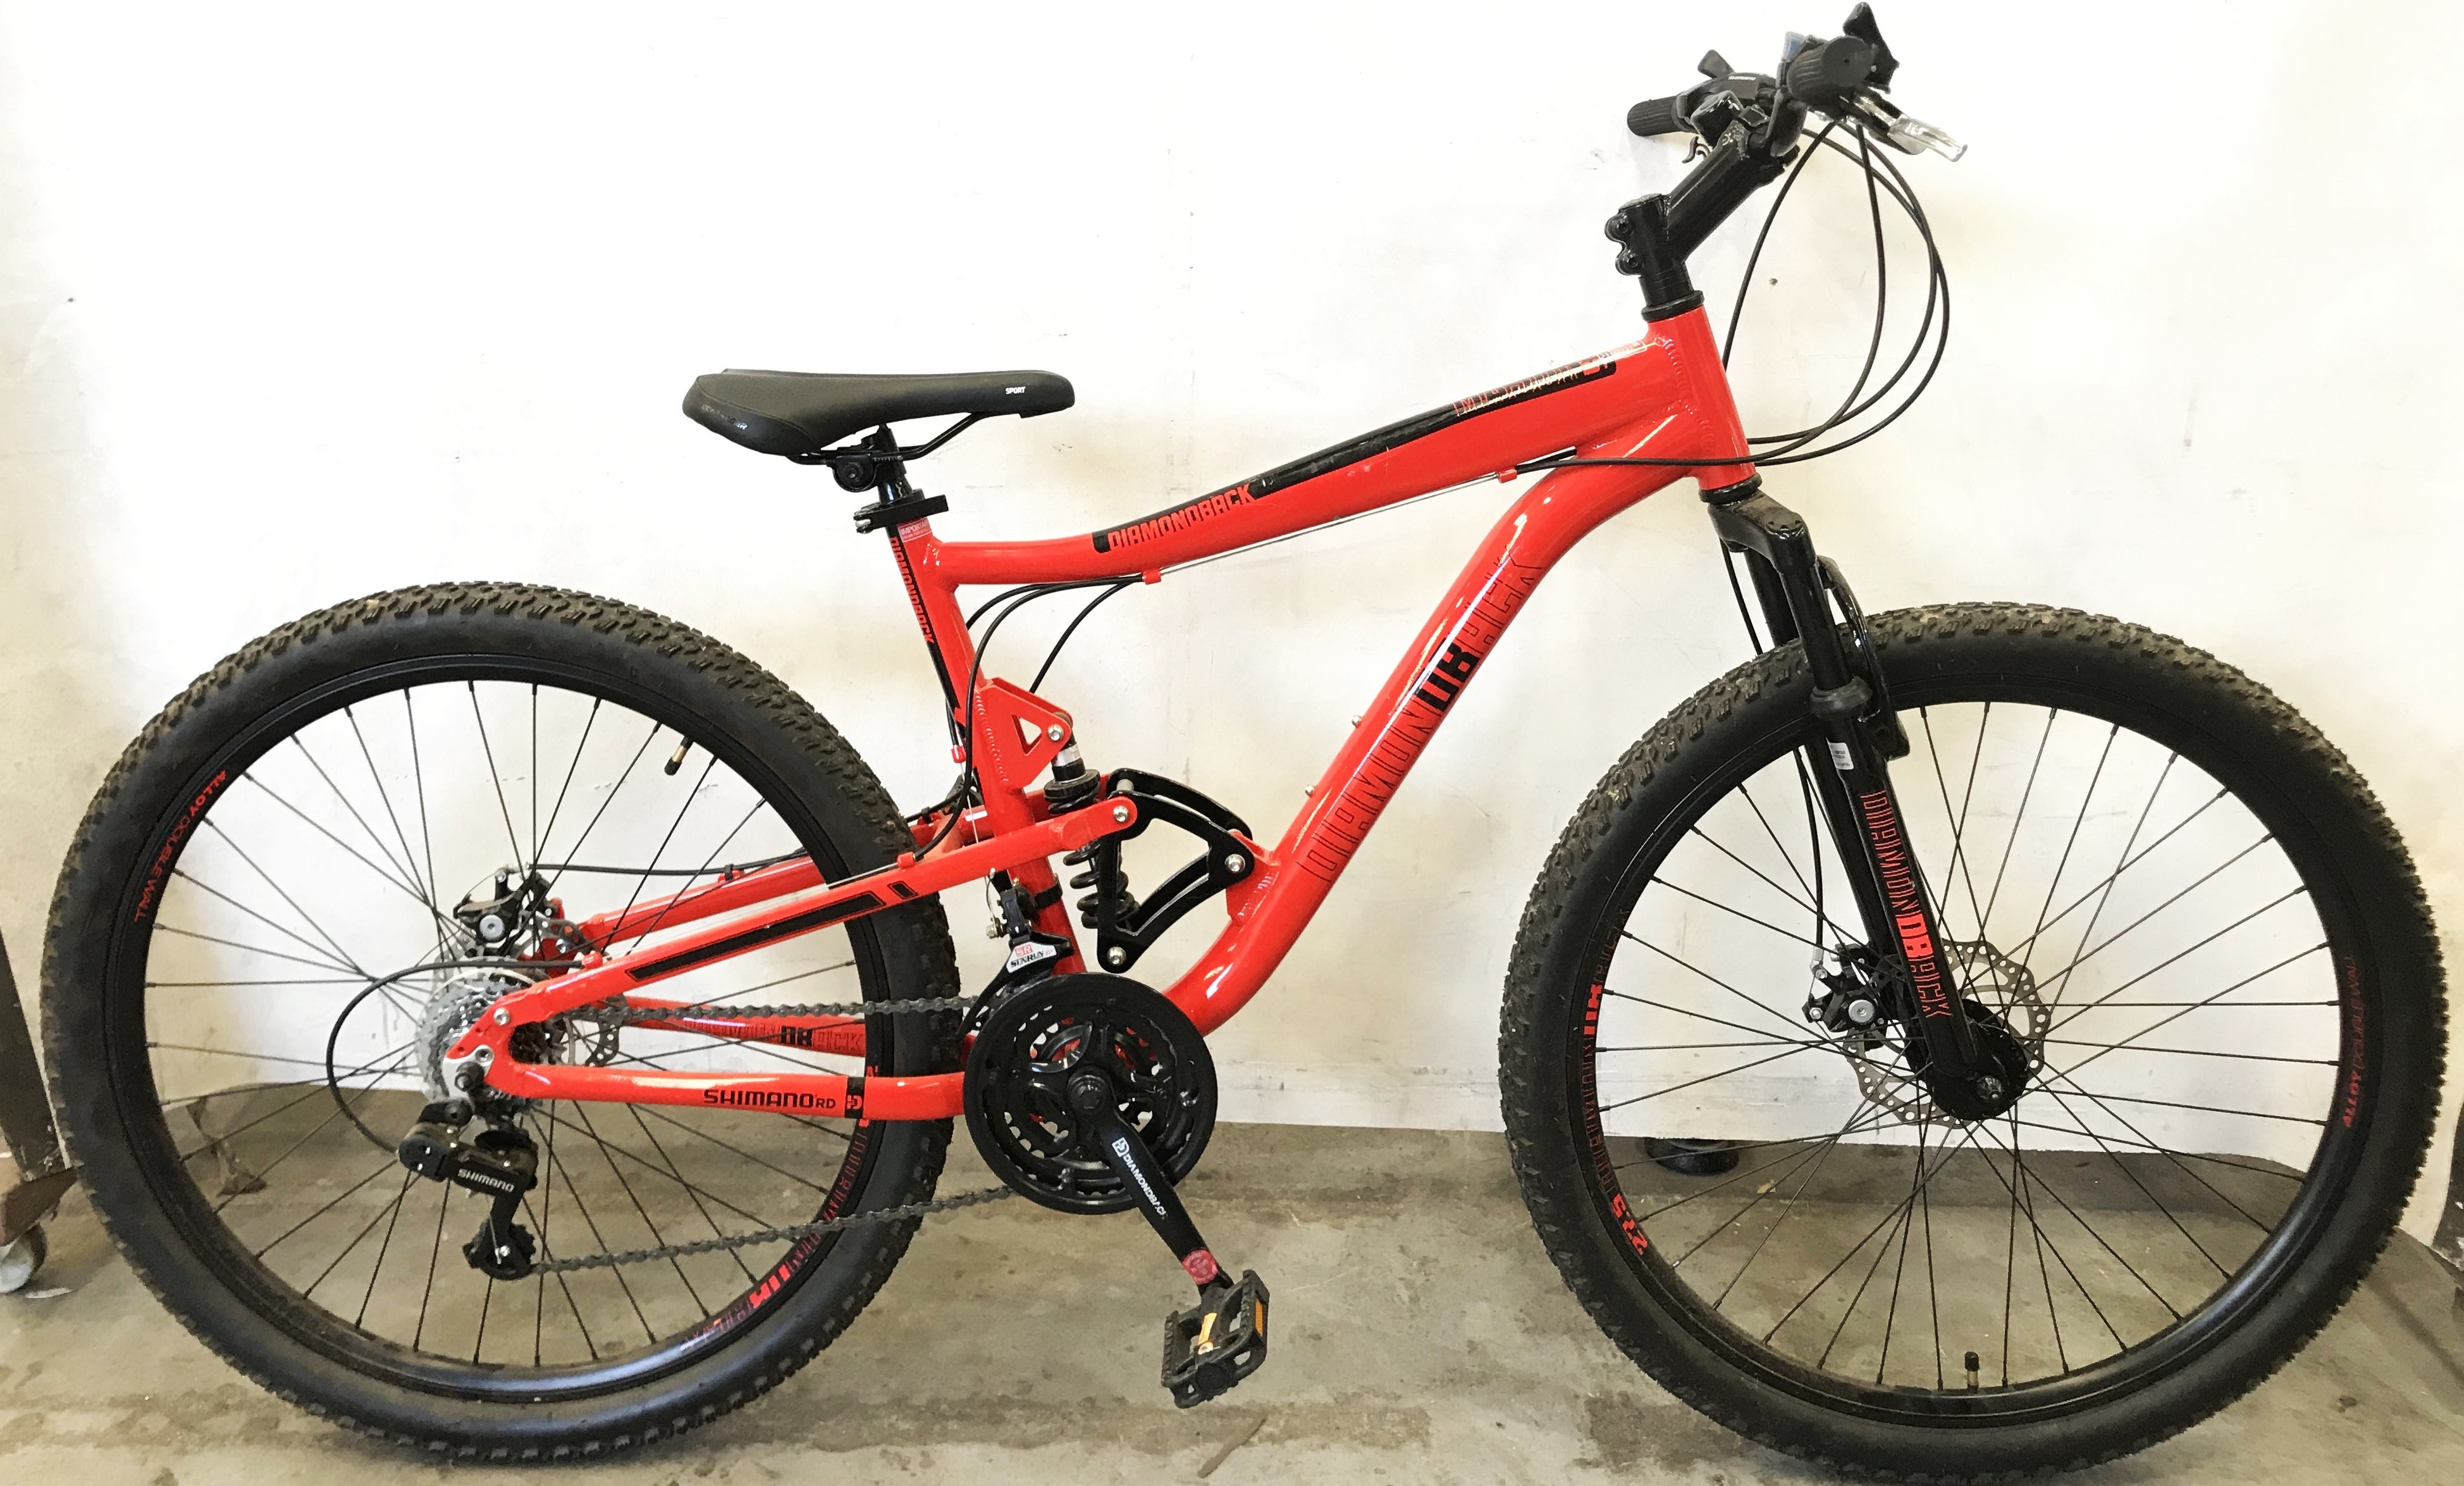 diamondback mountain bike red